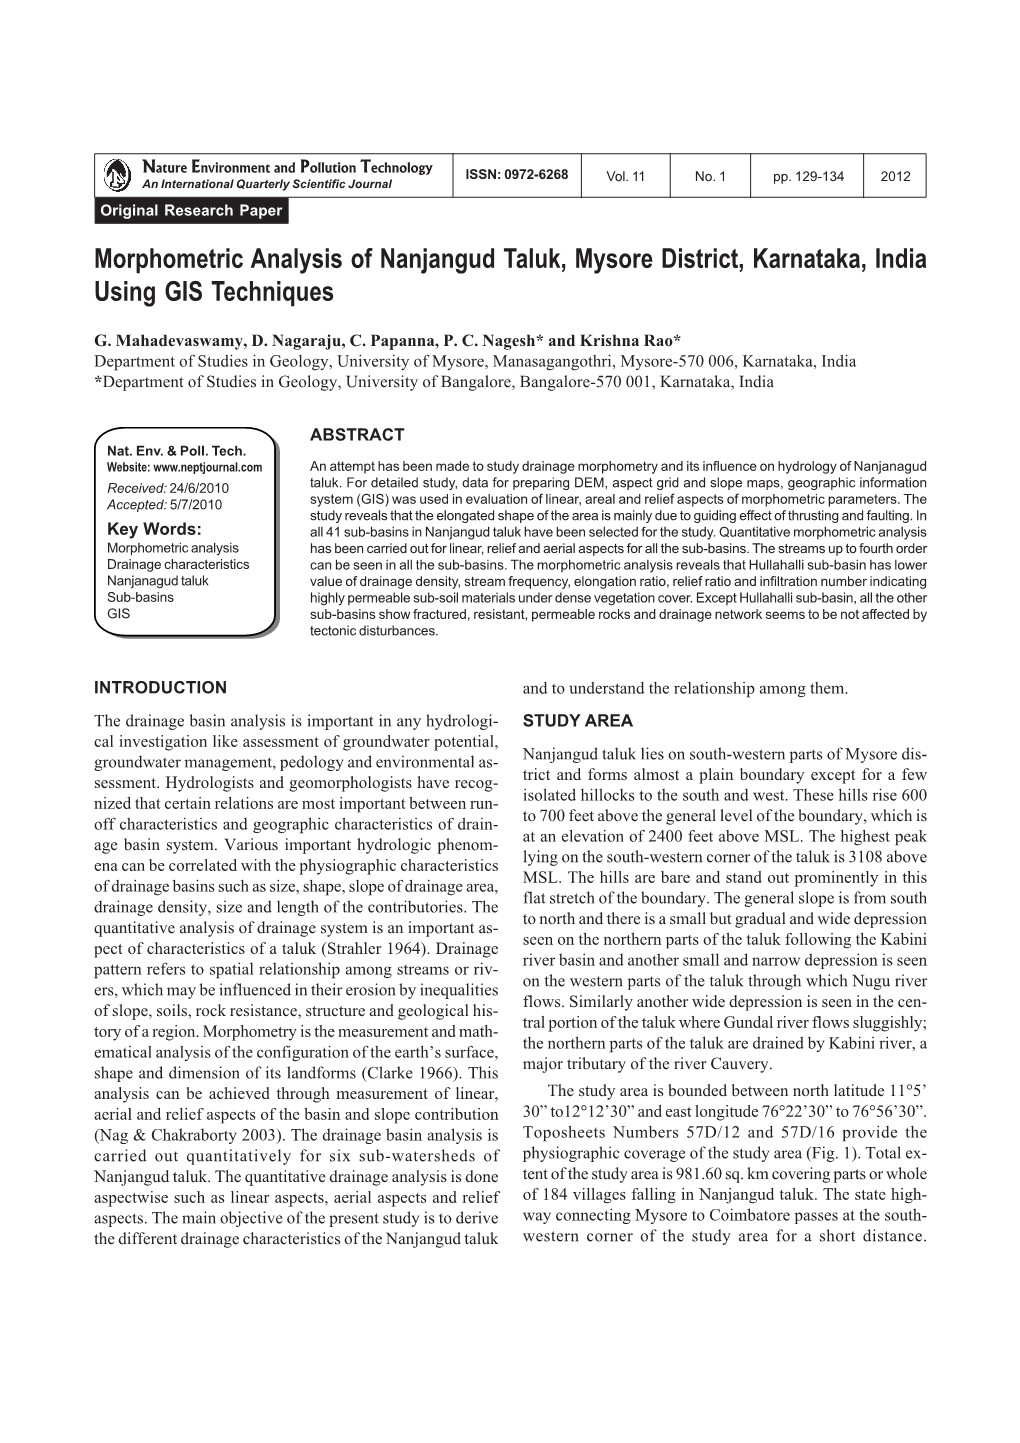 Morphometric Analysis of Nanjangud Taluk, Mysore District, Karnataka, India Using GIS Techniques